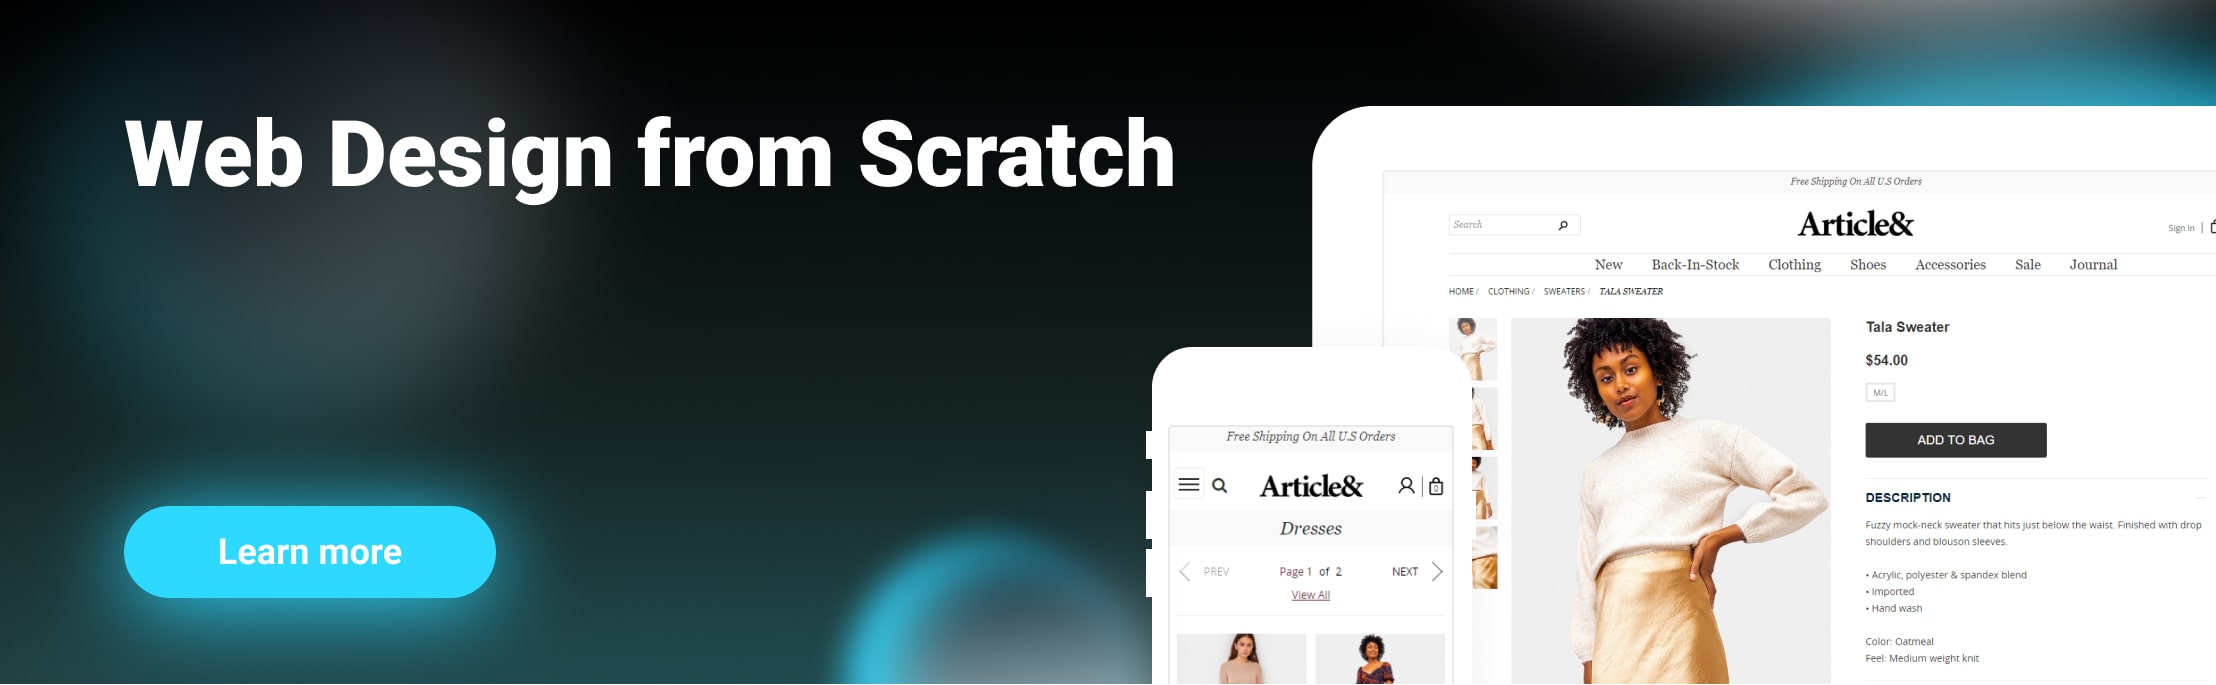 Web Design from Scratch